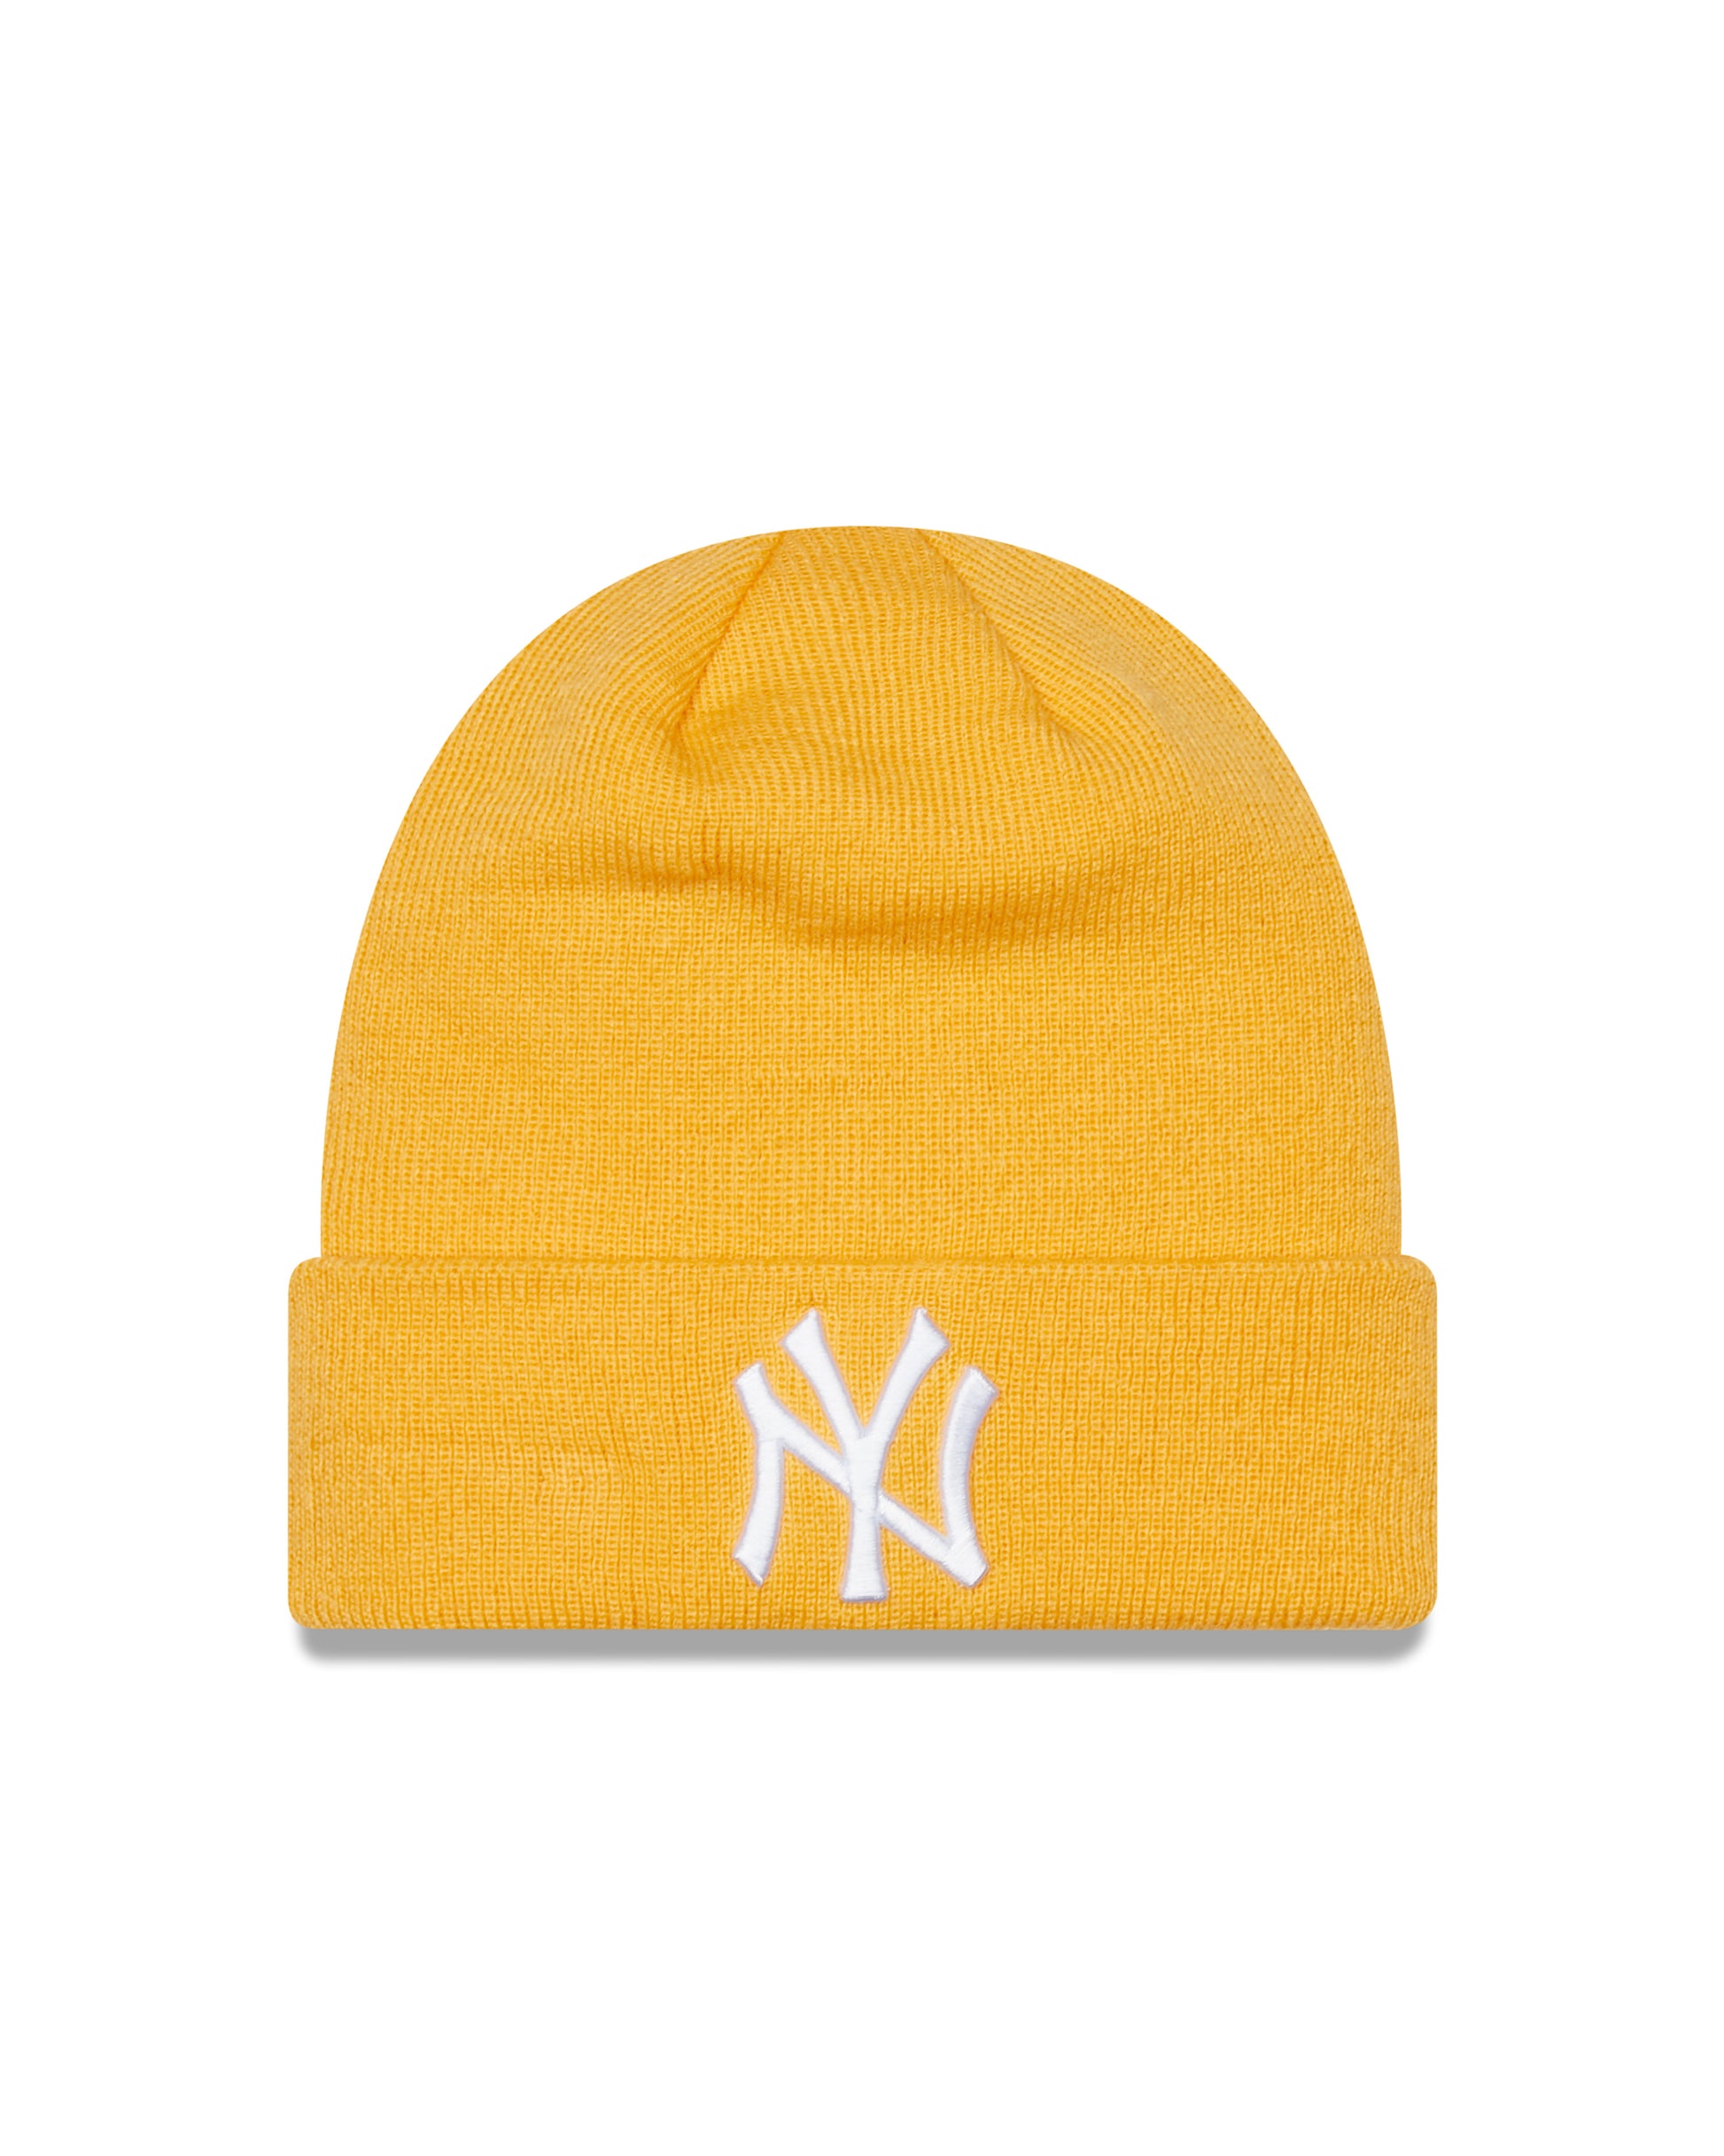 League Essentials Cuff Beanie New York Yankees - Yellow/White - Headz Up 